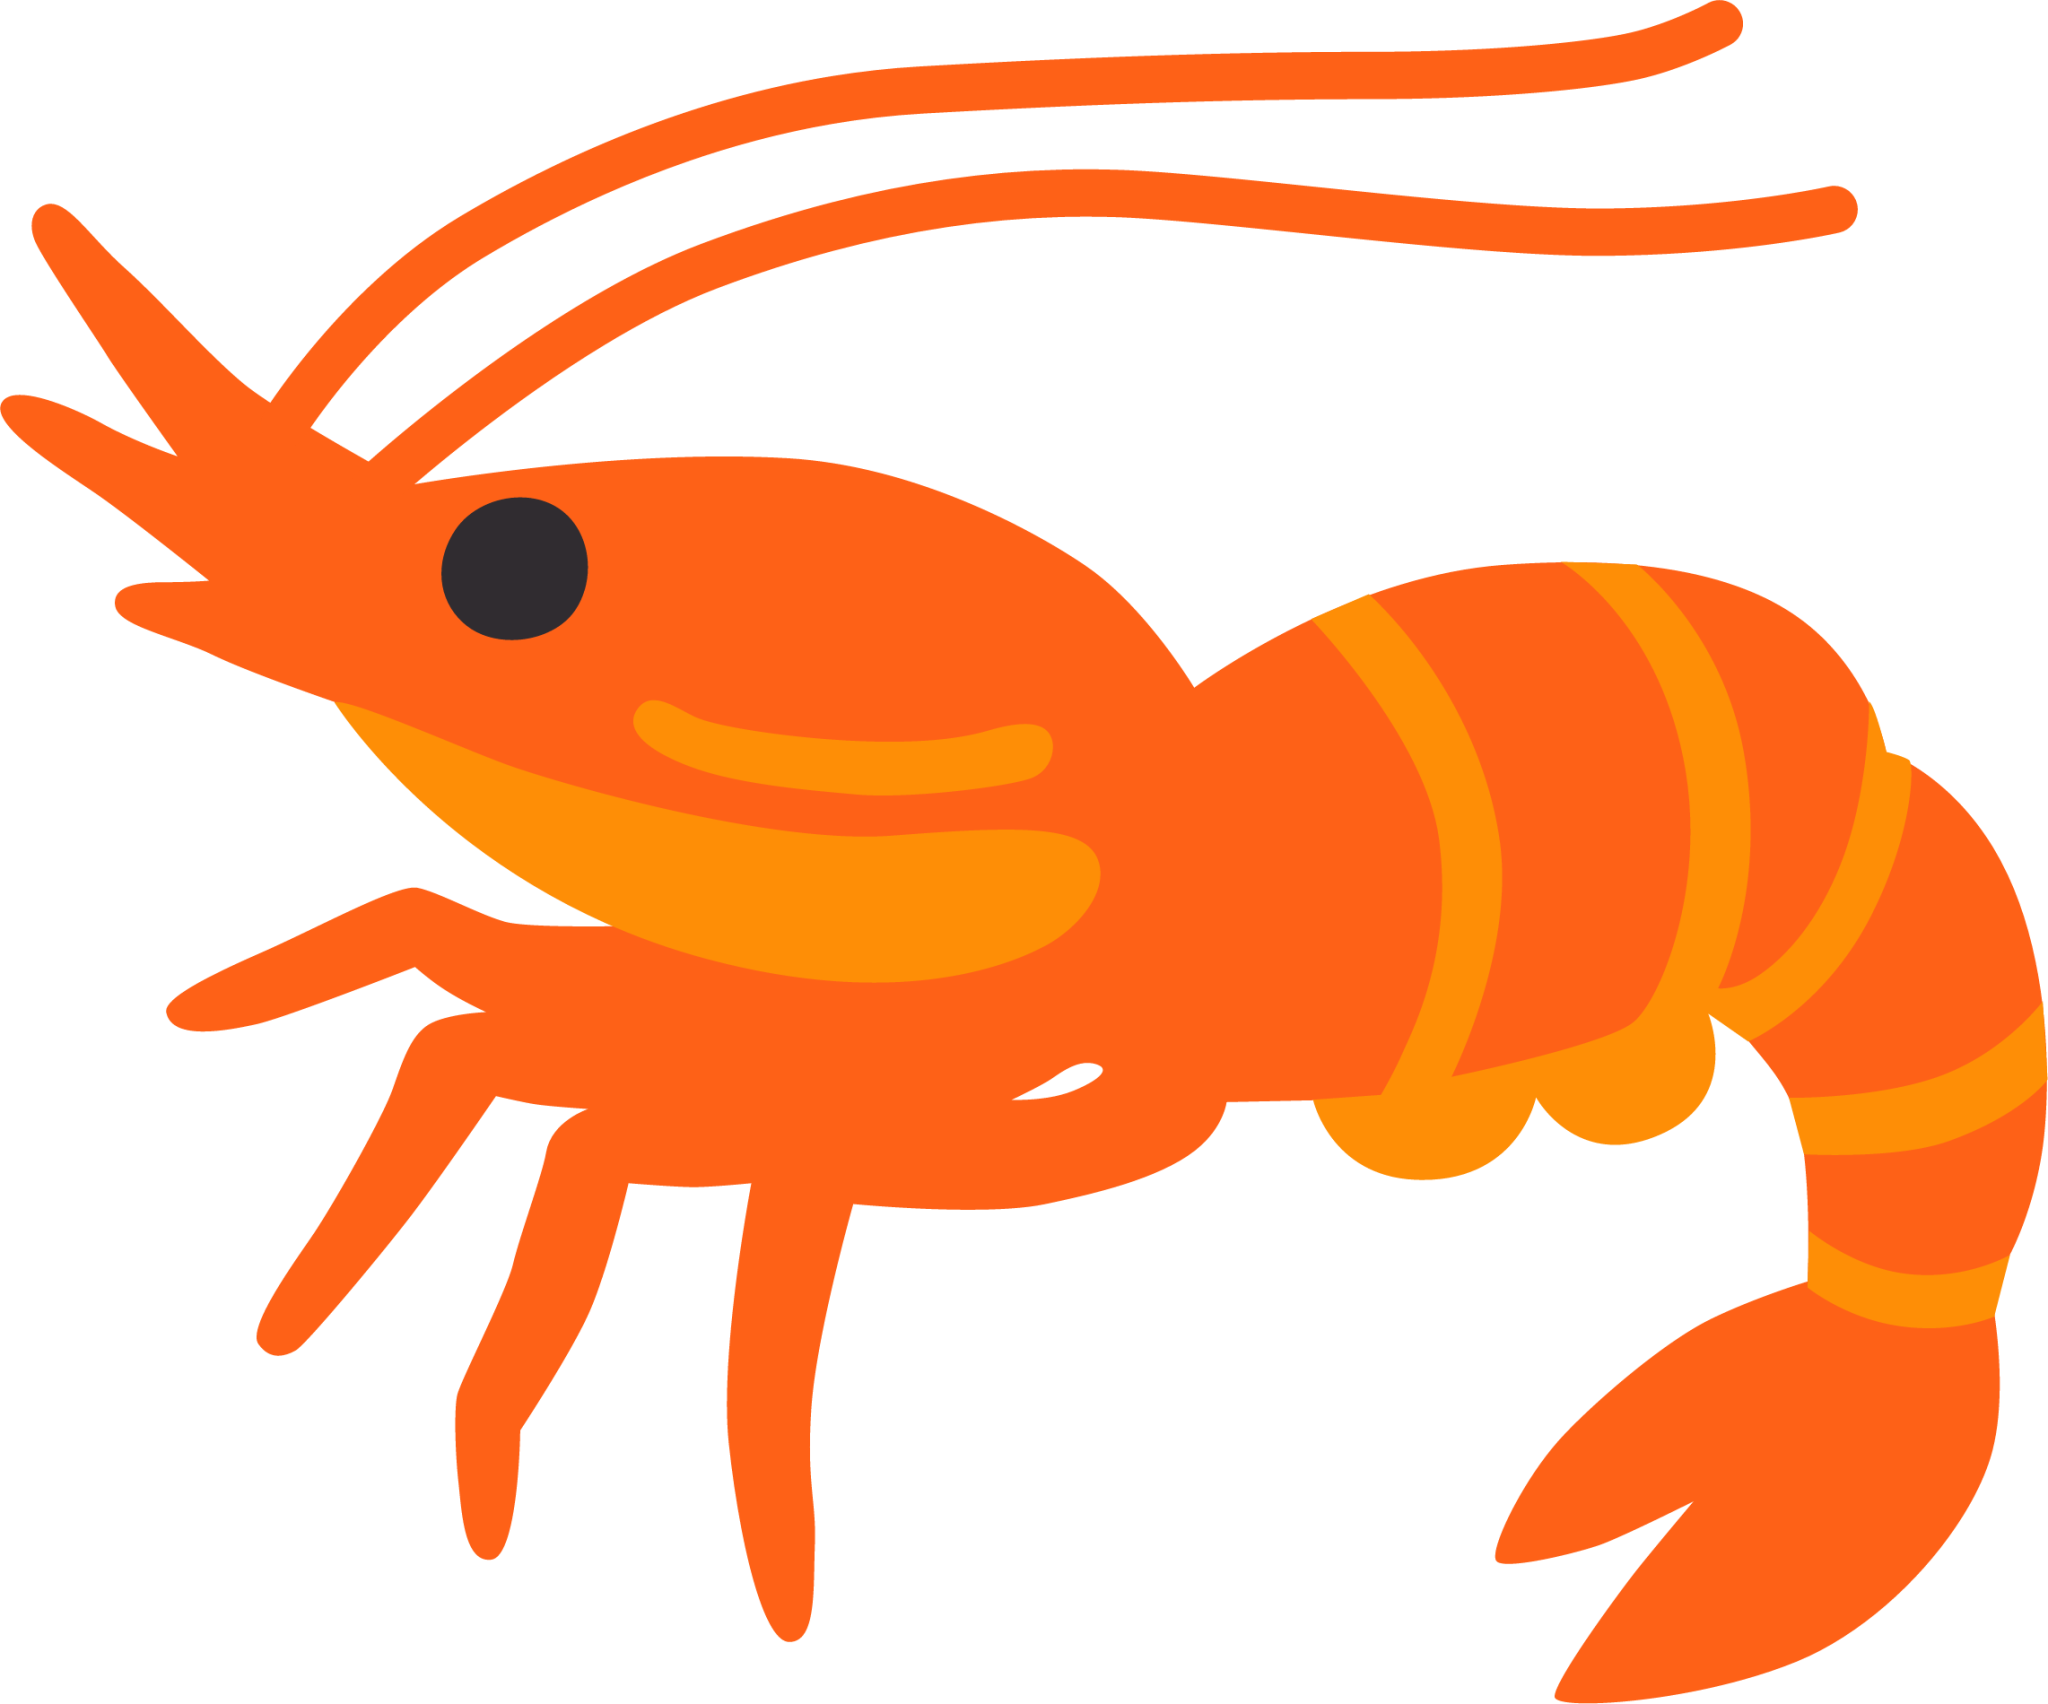 shrimp emoji